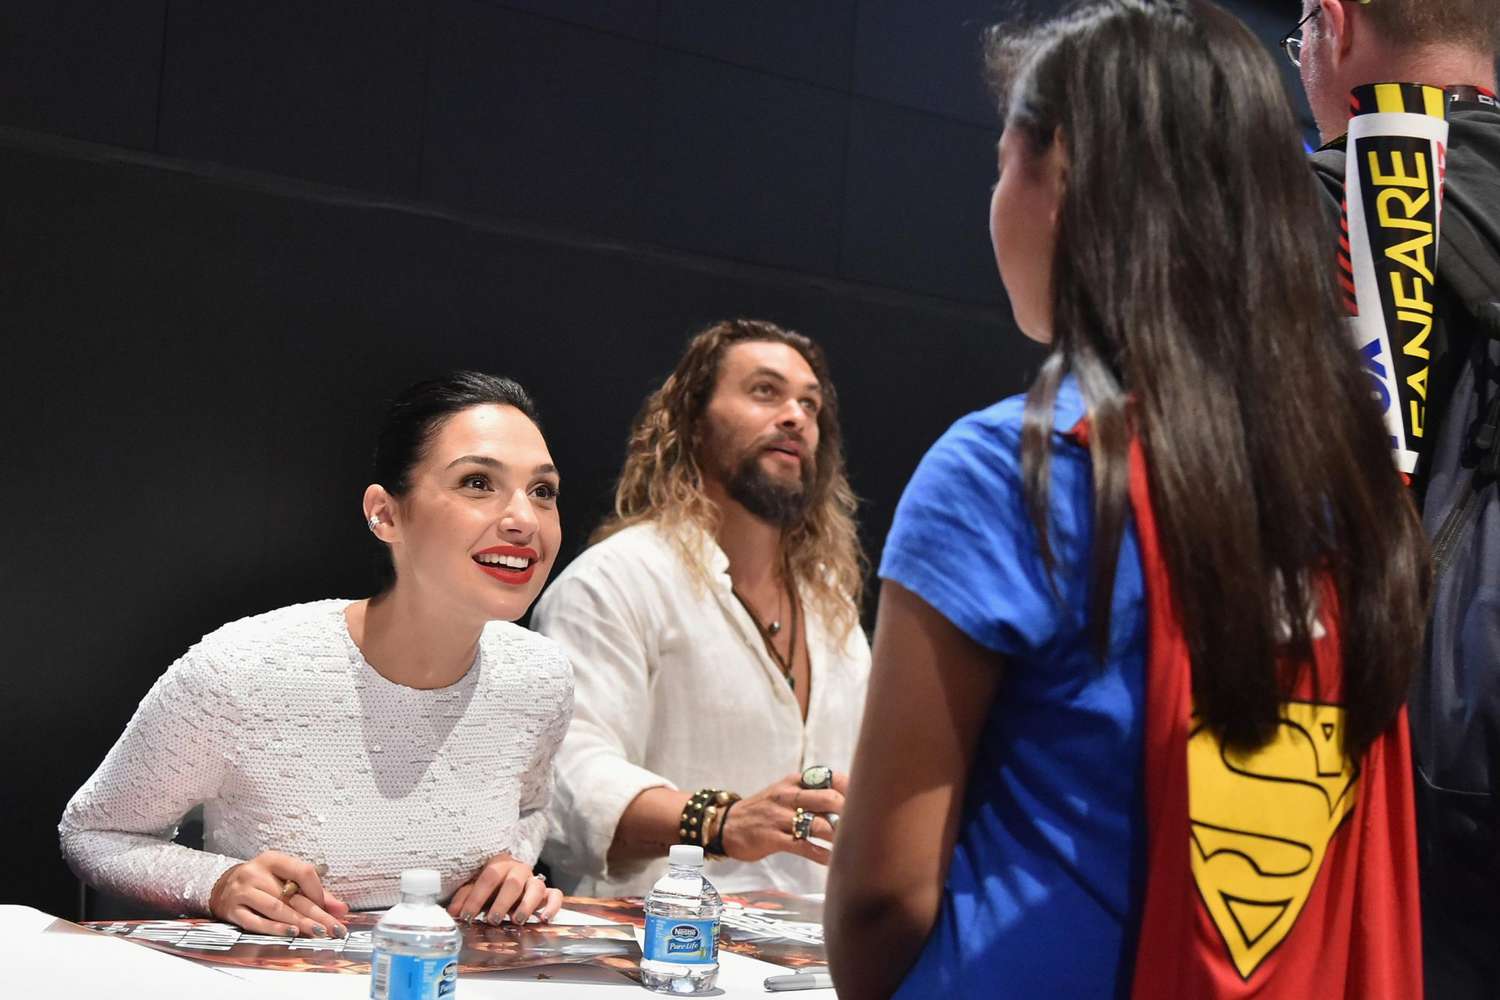 Comic-Con International 2017 - "Justice League" Autograph Signing